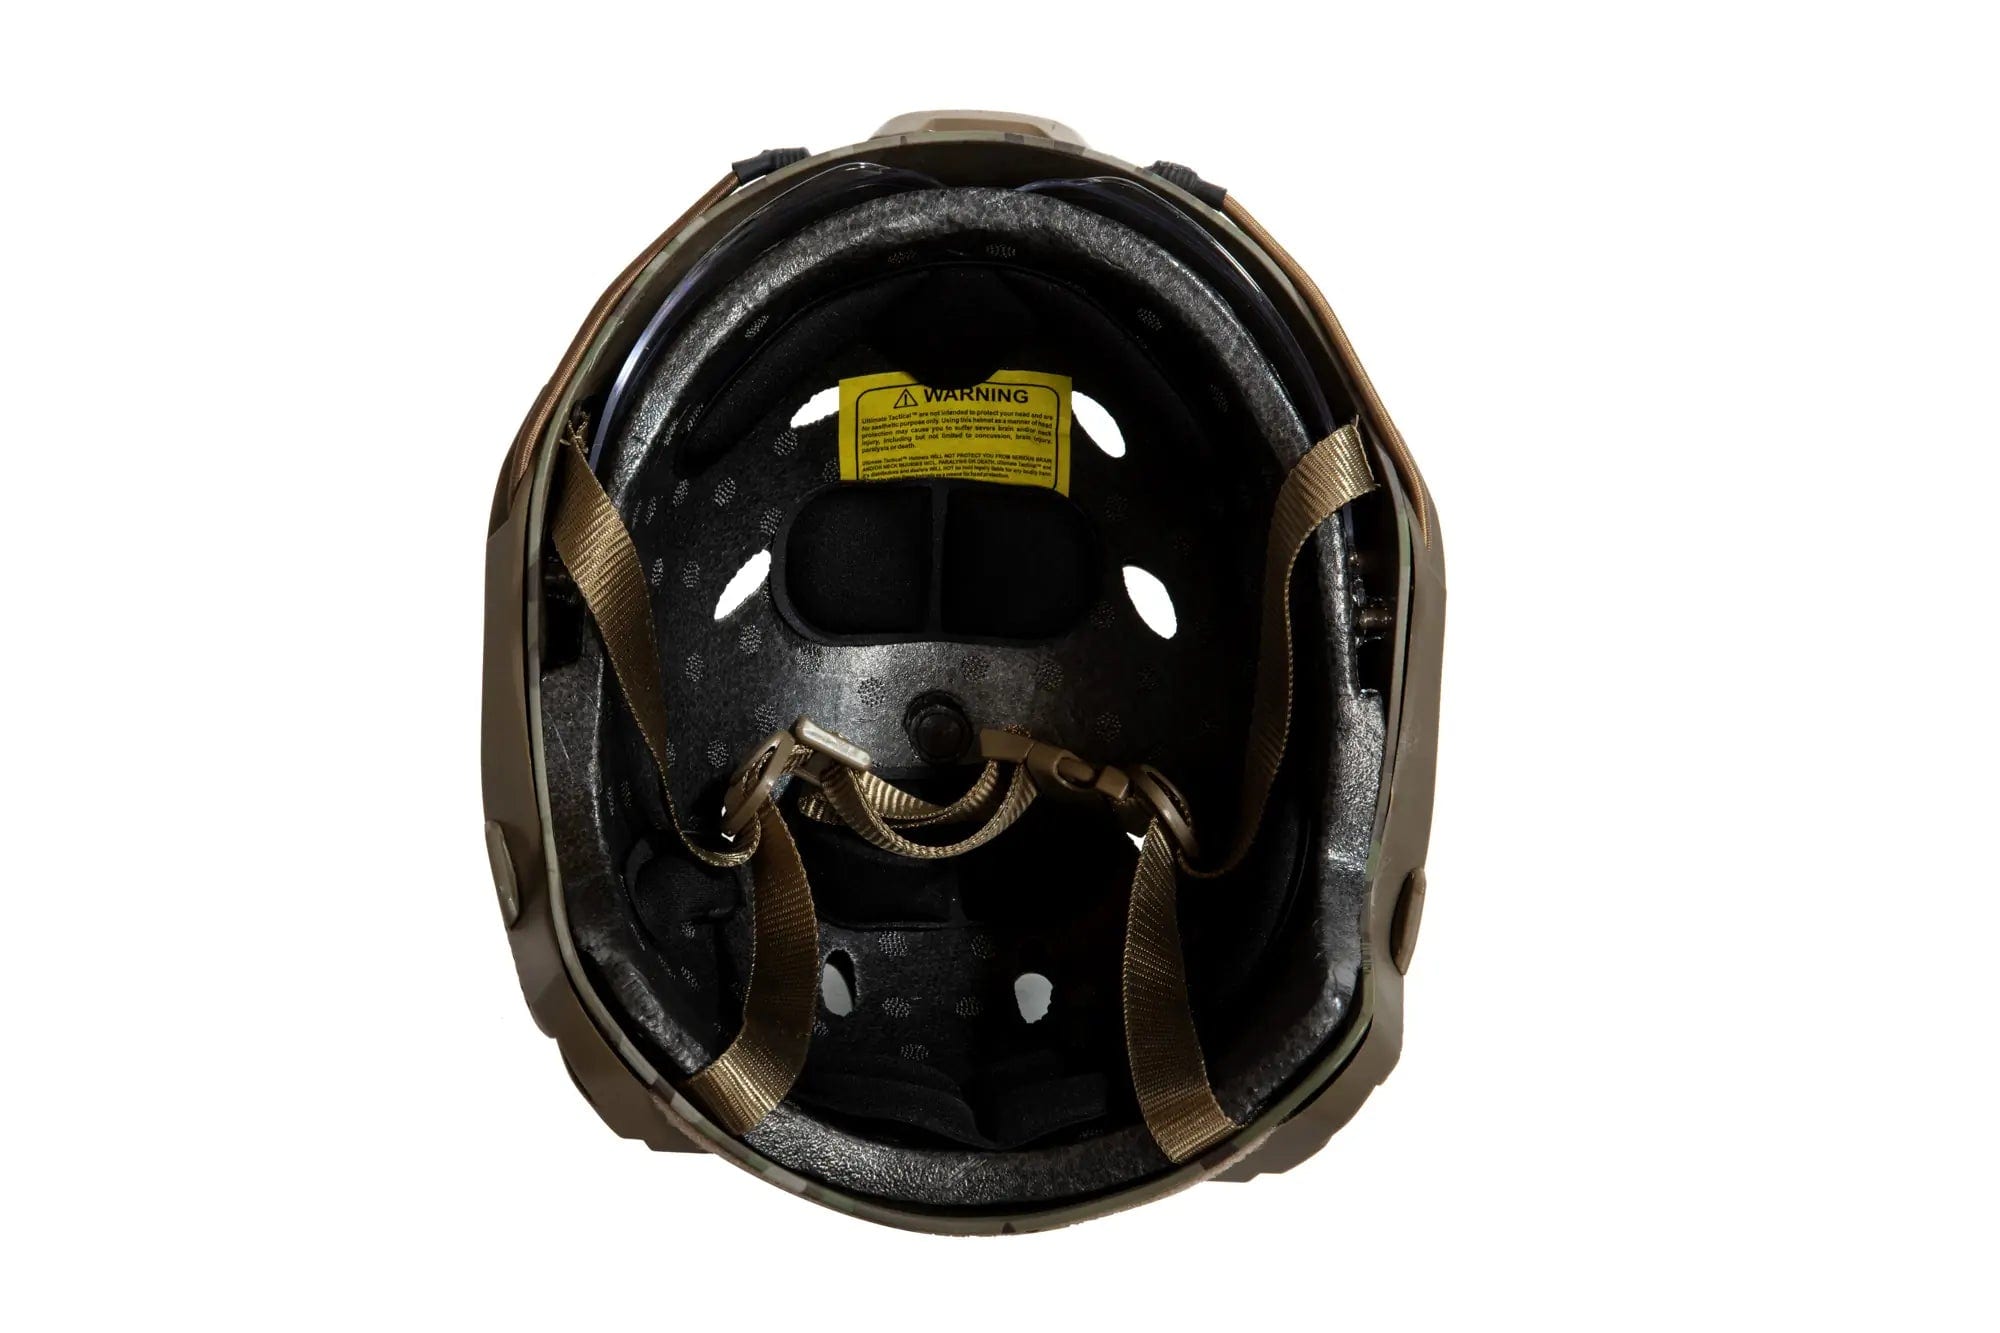 X-Shield PJ Helmet Replica With Goggles - Multicam